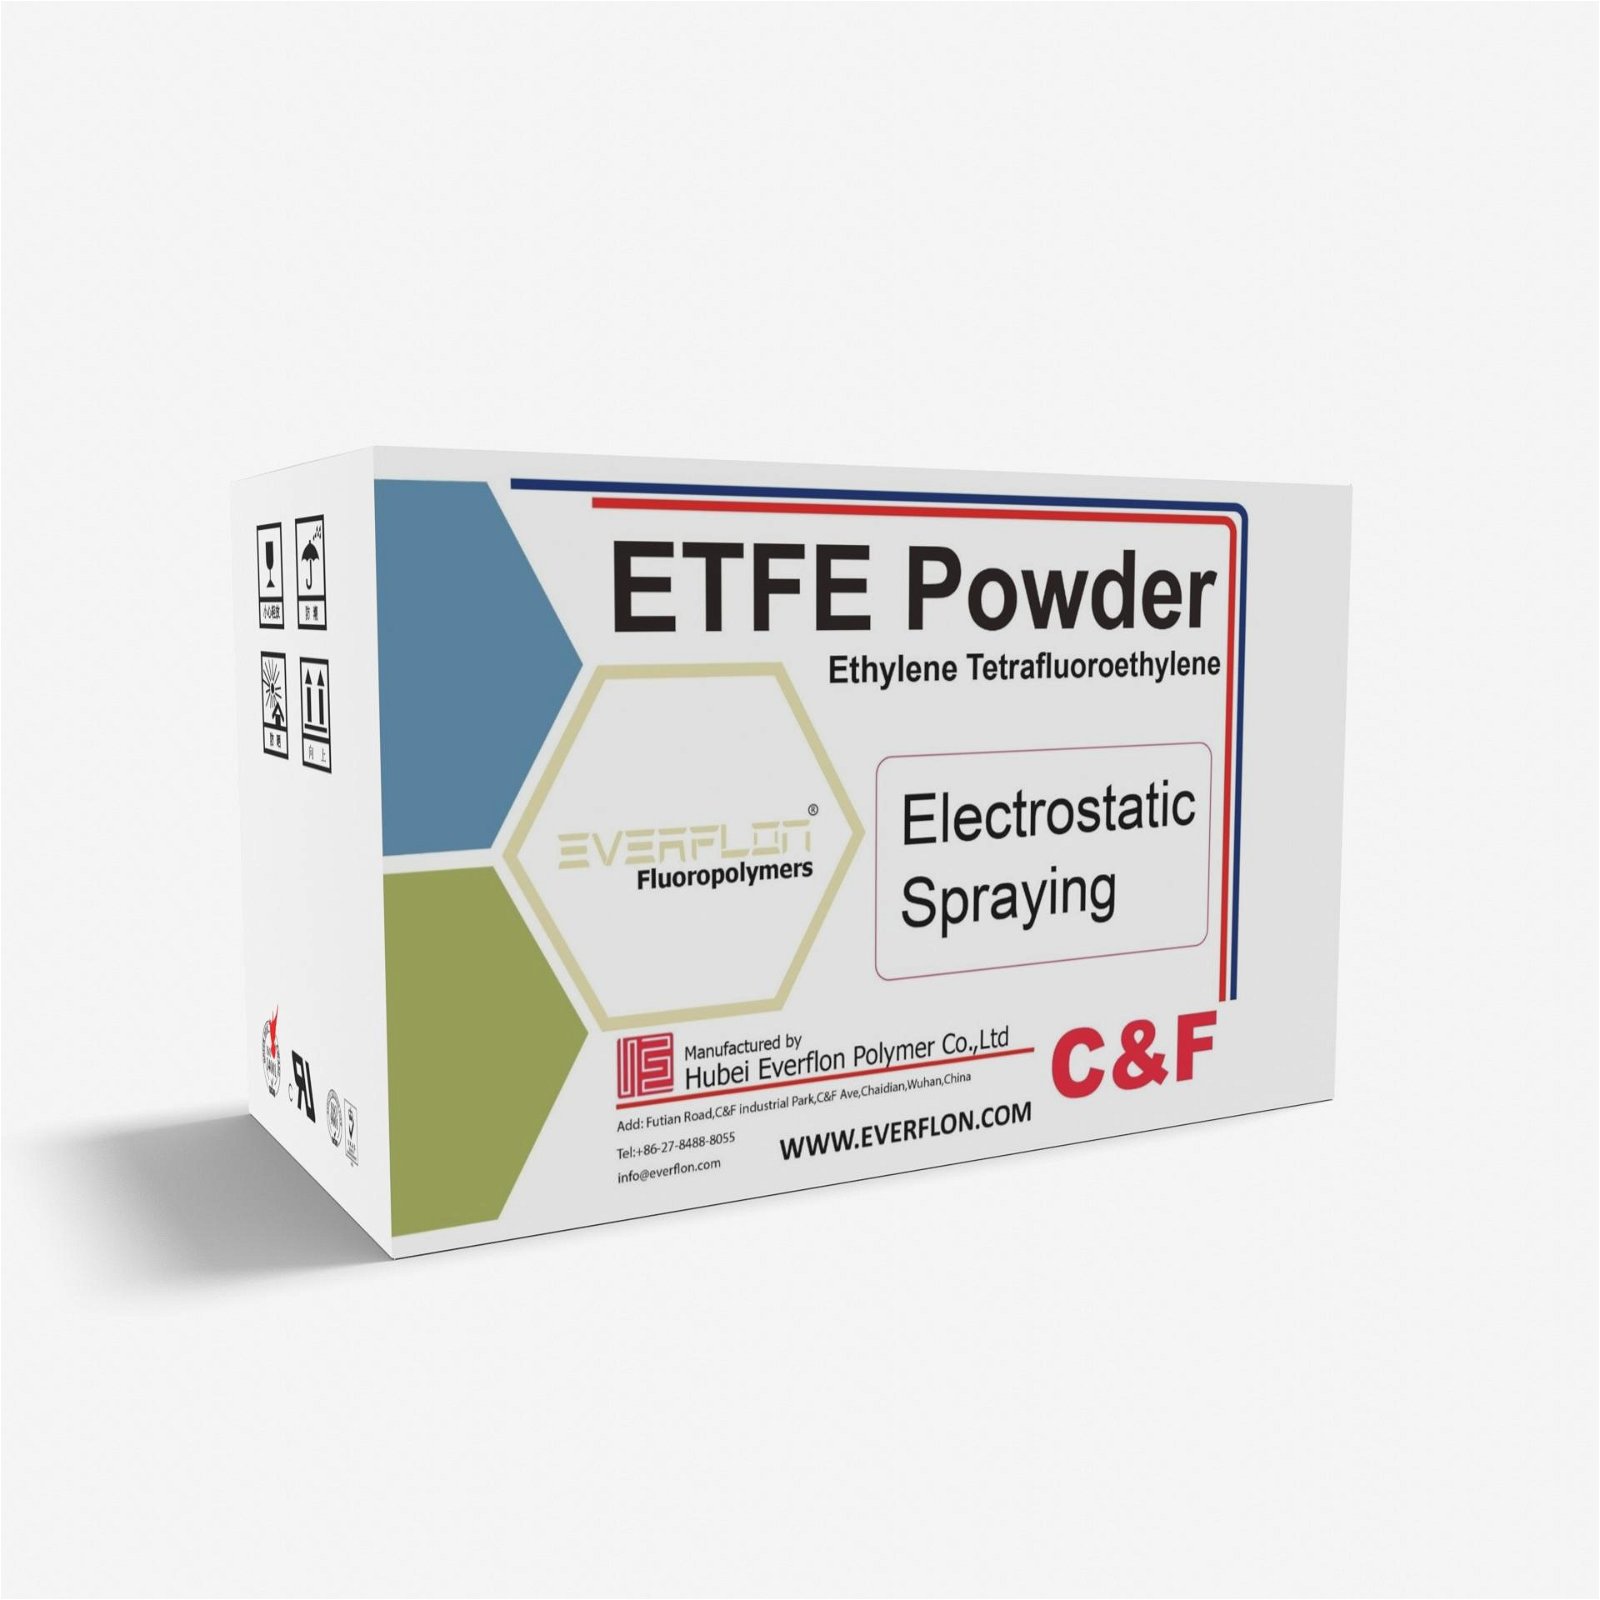 ETFE powder